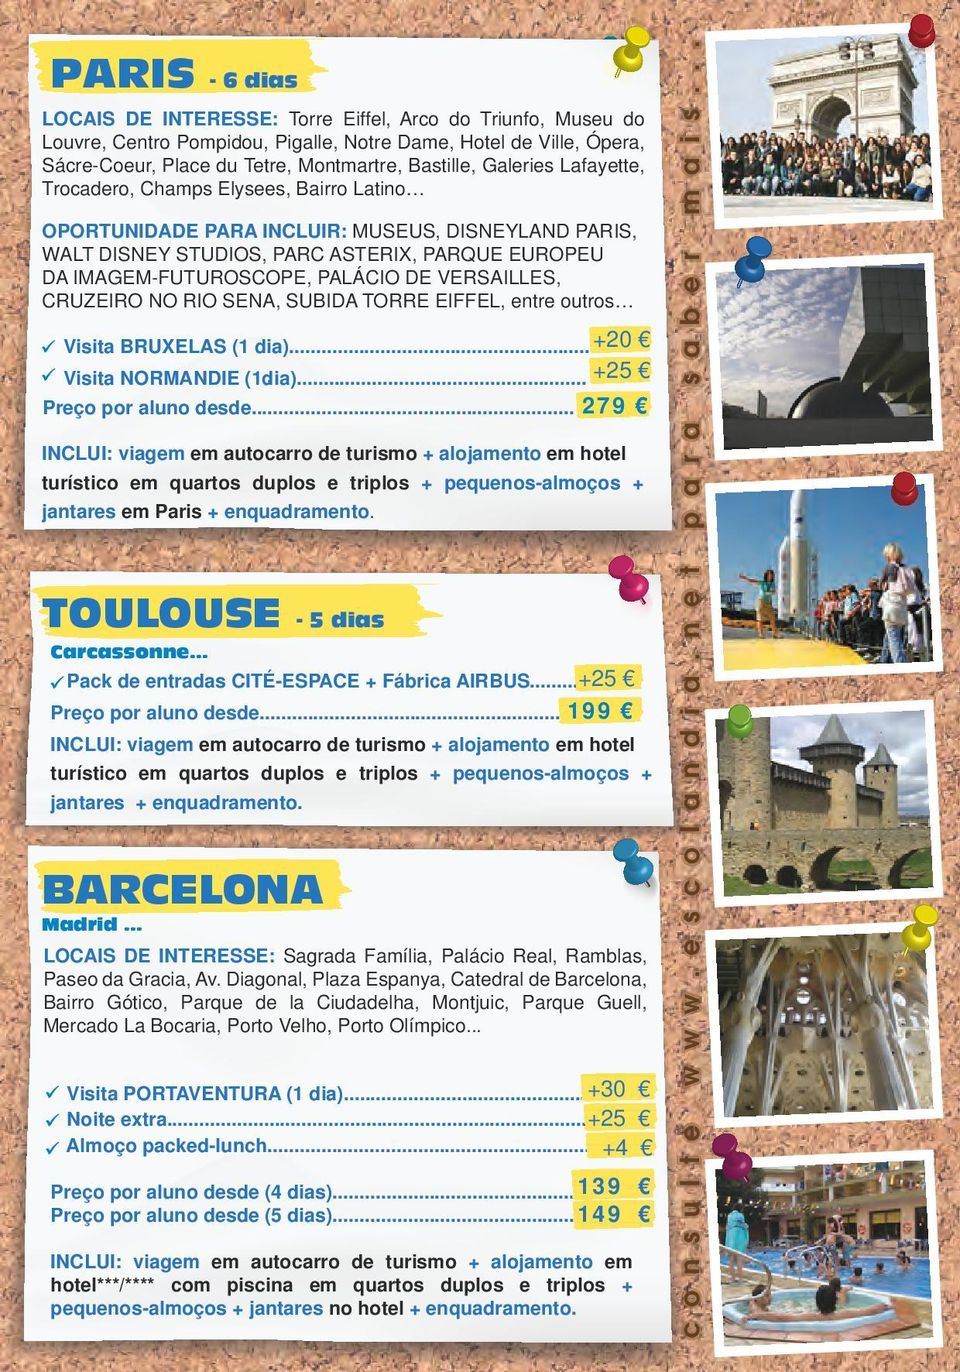 .. LOCAIS DE INTERESSE: Sagrada Família, Palácio Real, Ramblas, Paseo da Gracia, Av.